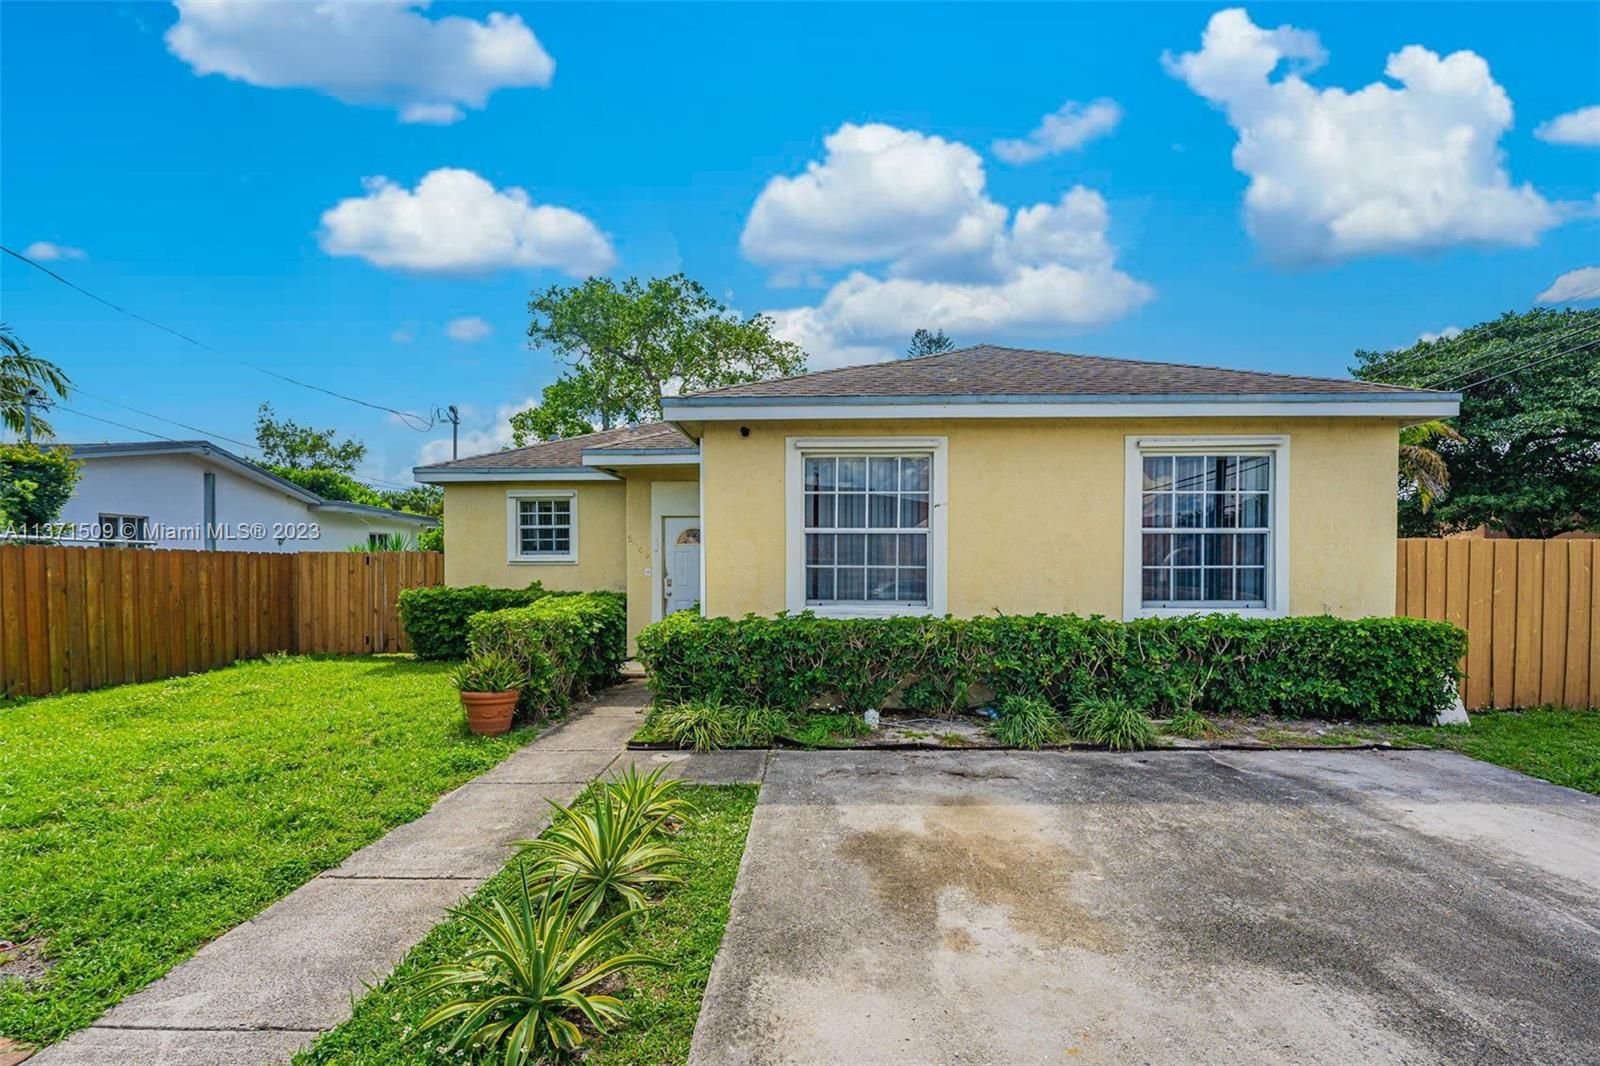 Real estate property located at 5940 19th Ave, Miami-Dade County, Miami, FL